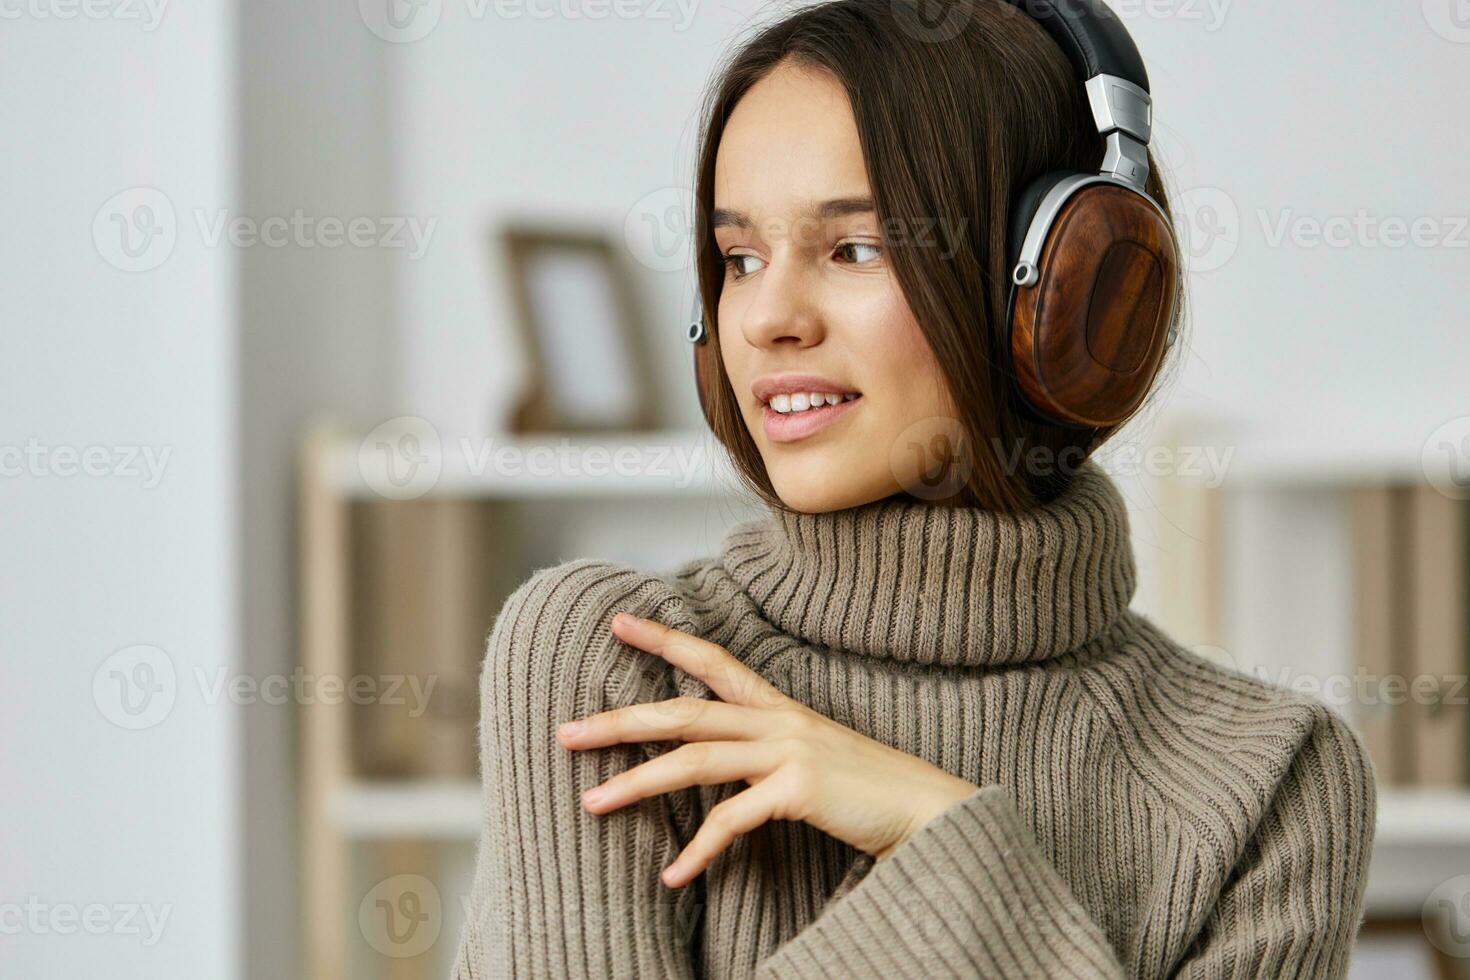 Musik- Frau Schüler kaukasisch Sofa Zuhause Kopfhörer glücklich Kopfhörer Innen- jung foto